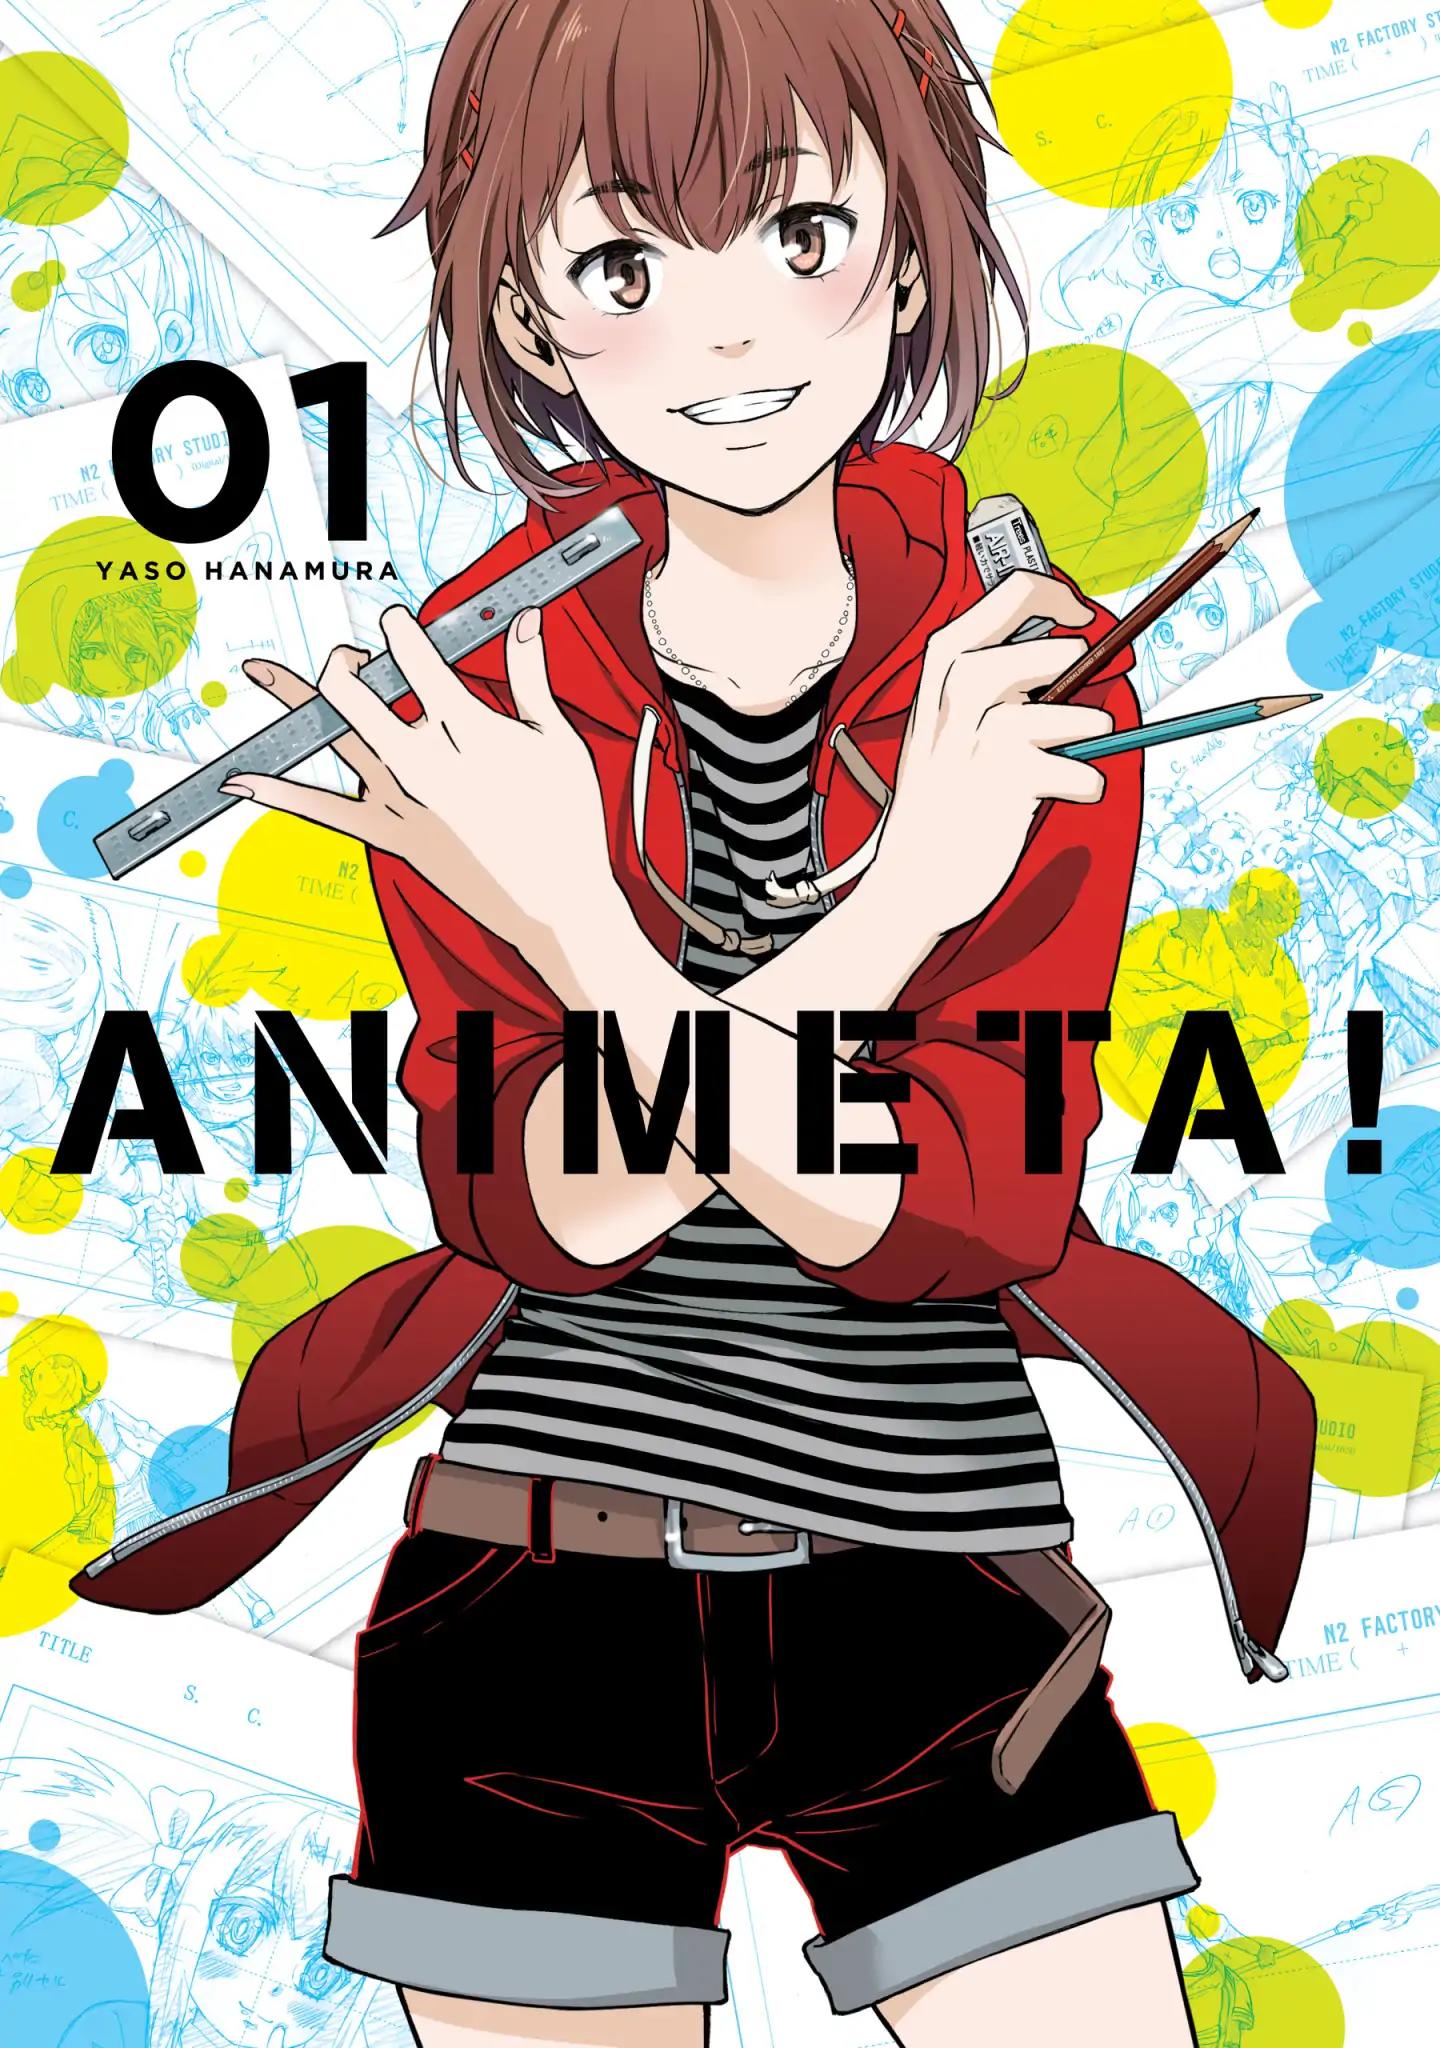 Animeta! Vol.1 CHAPTER 1: